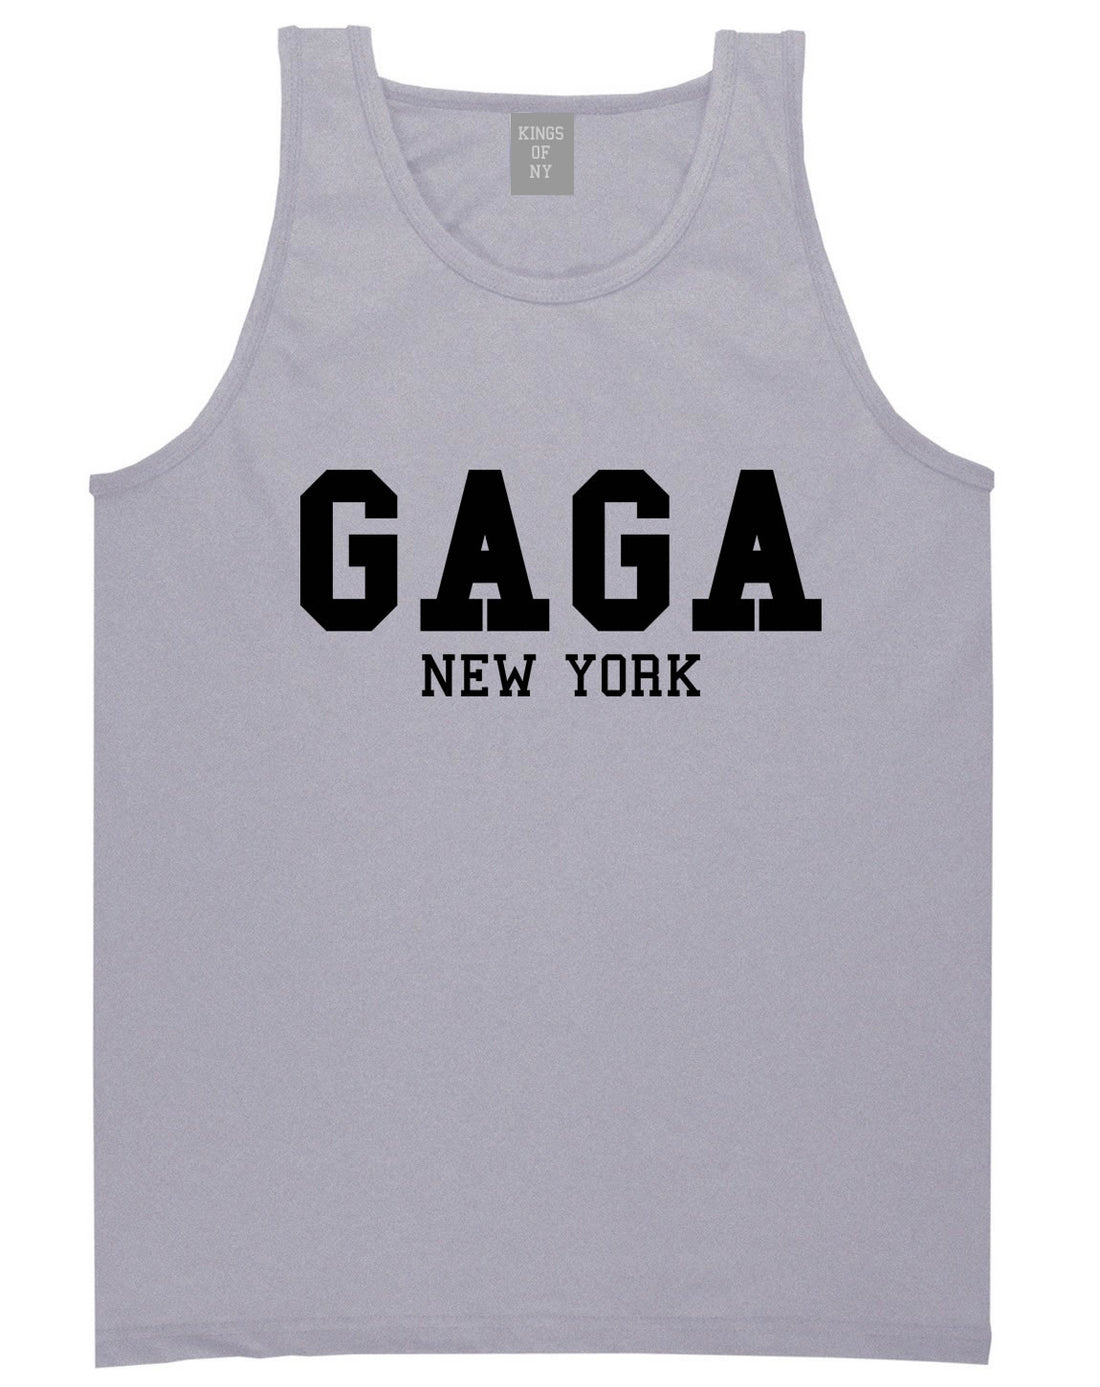 Gaga New York Tank Top in Grey by Kings Of NY